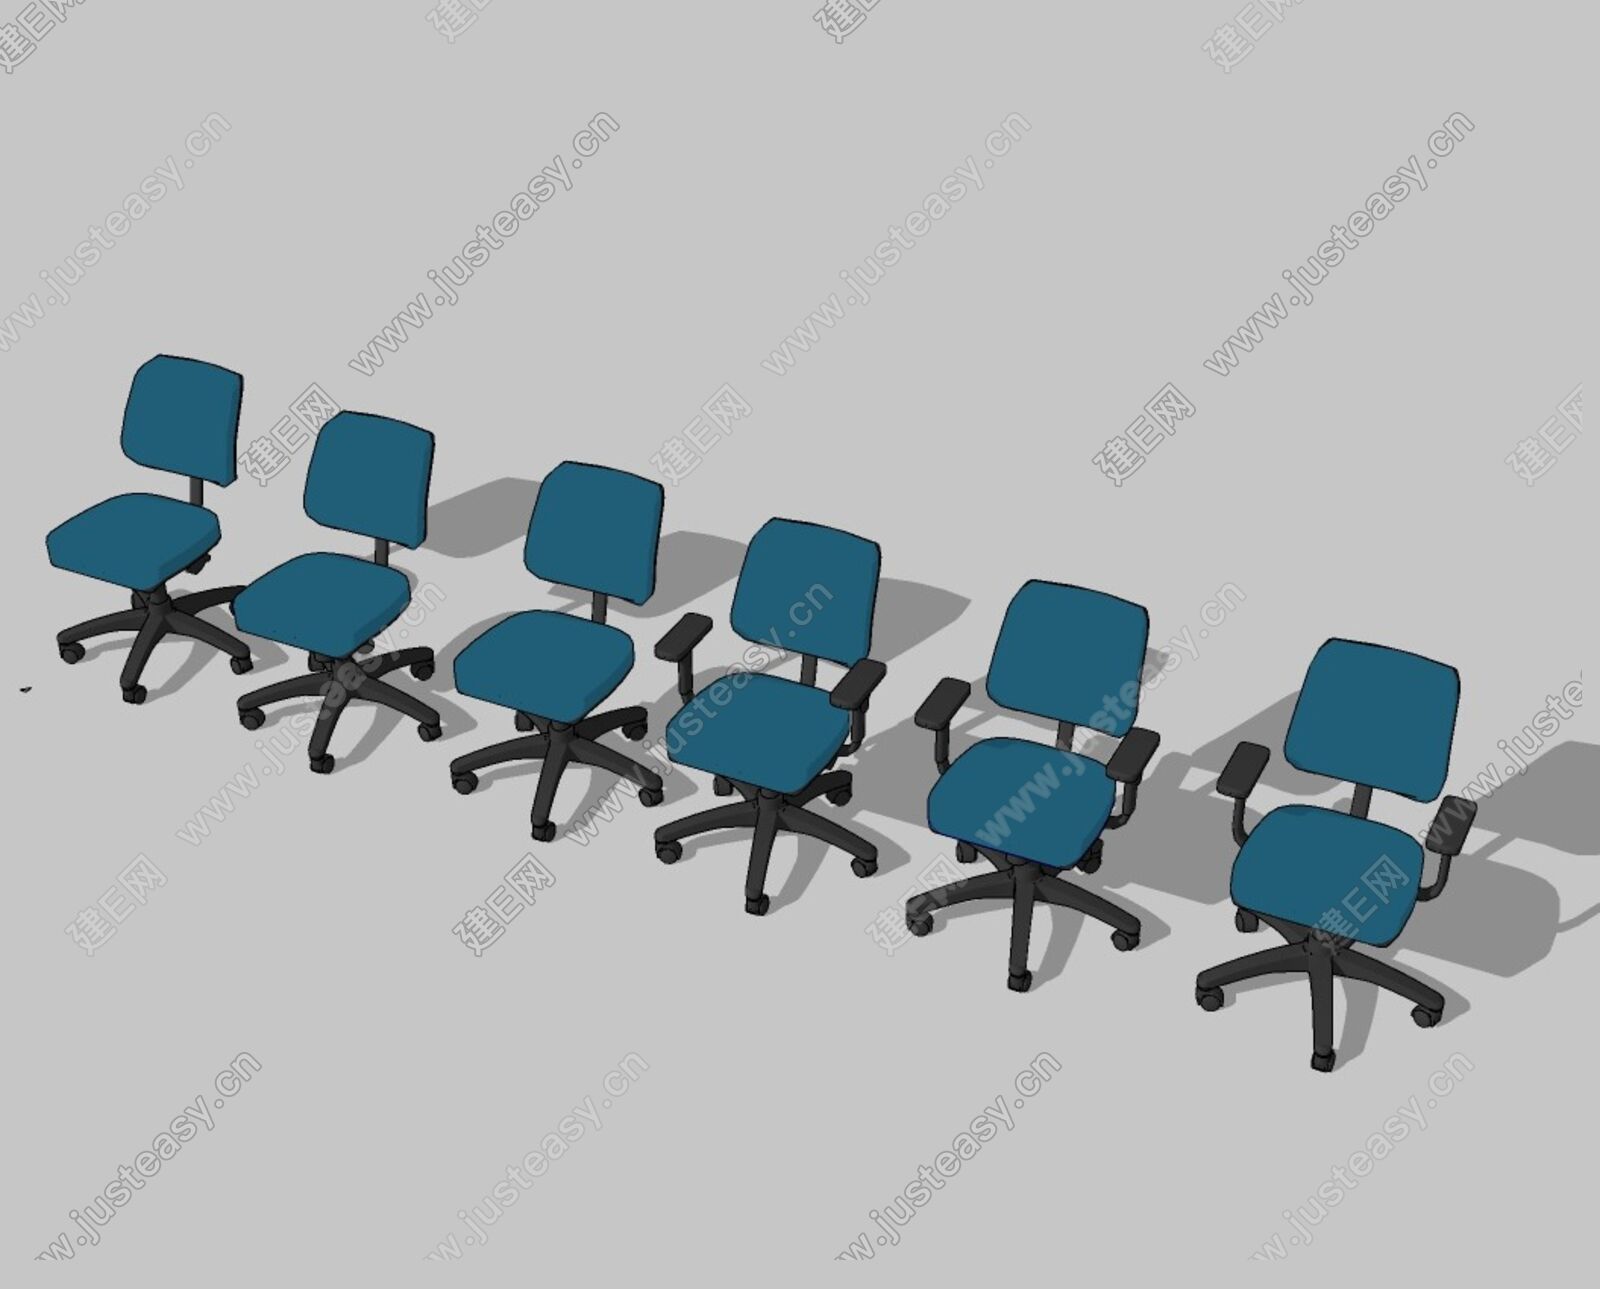 现代办公椅sketchup模型